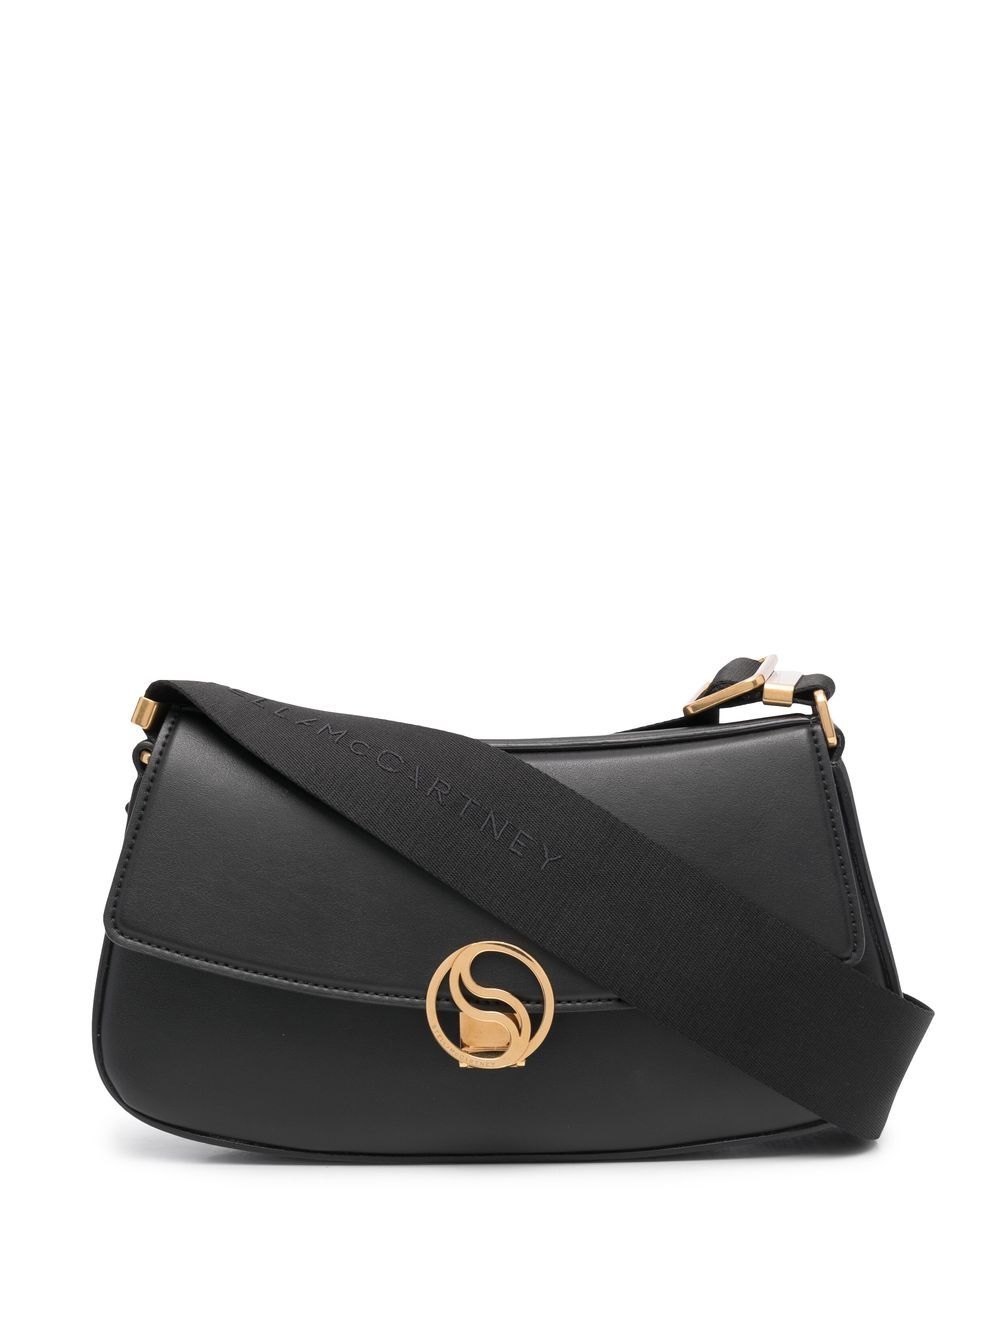 Stella McCartney logo clasp flap shoulder bag - Black